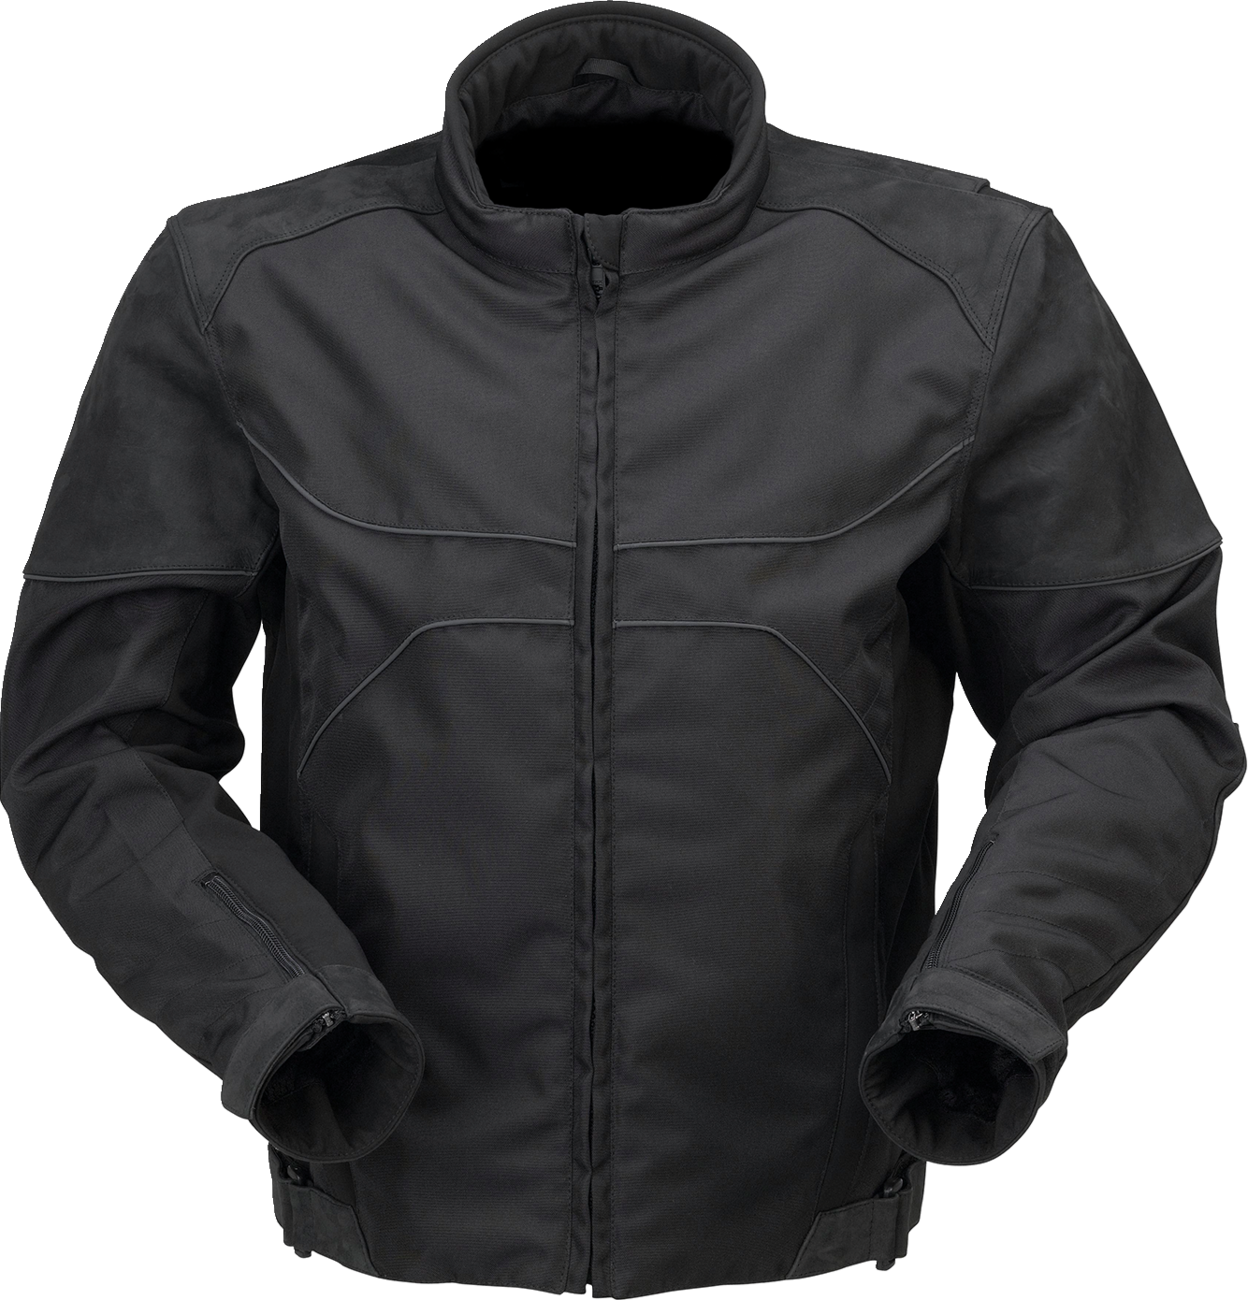 Z1R Reverance Jacket - Black - Medium 2820-5784